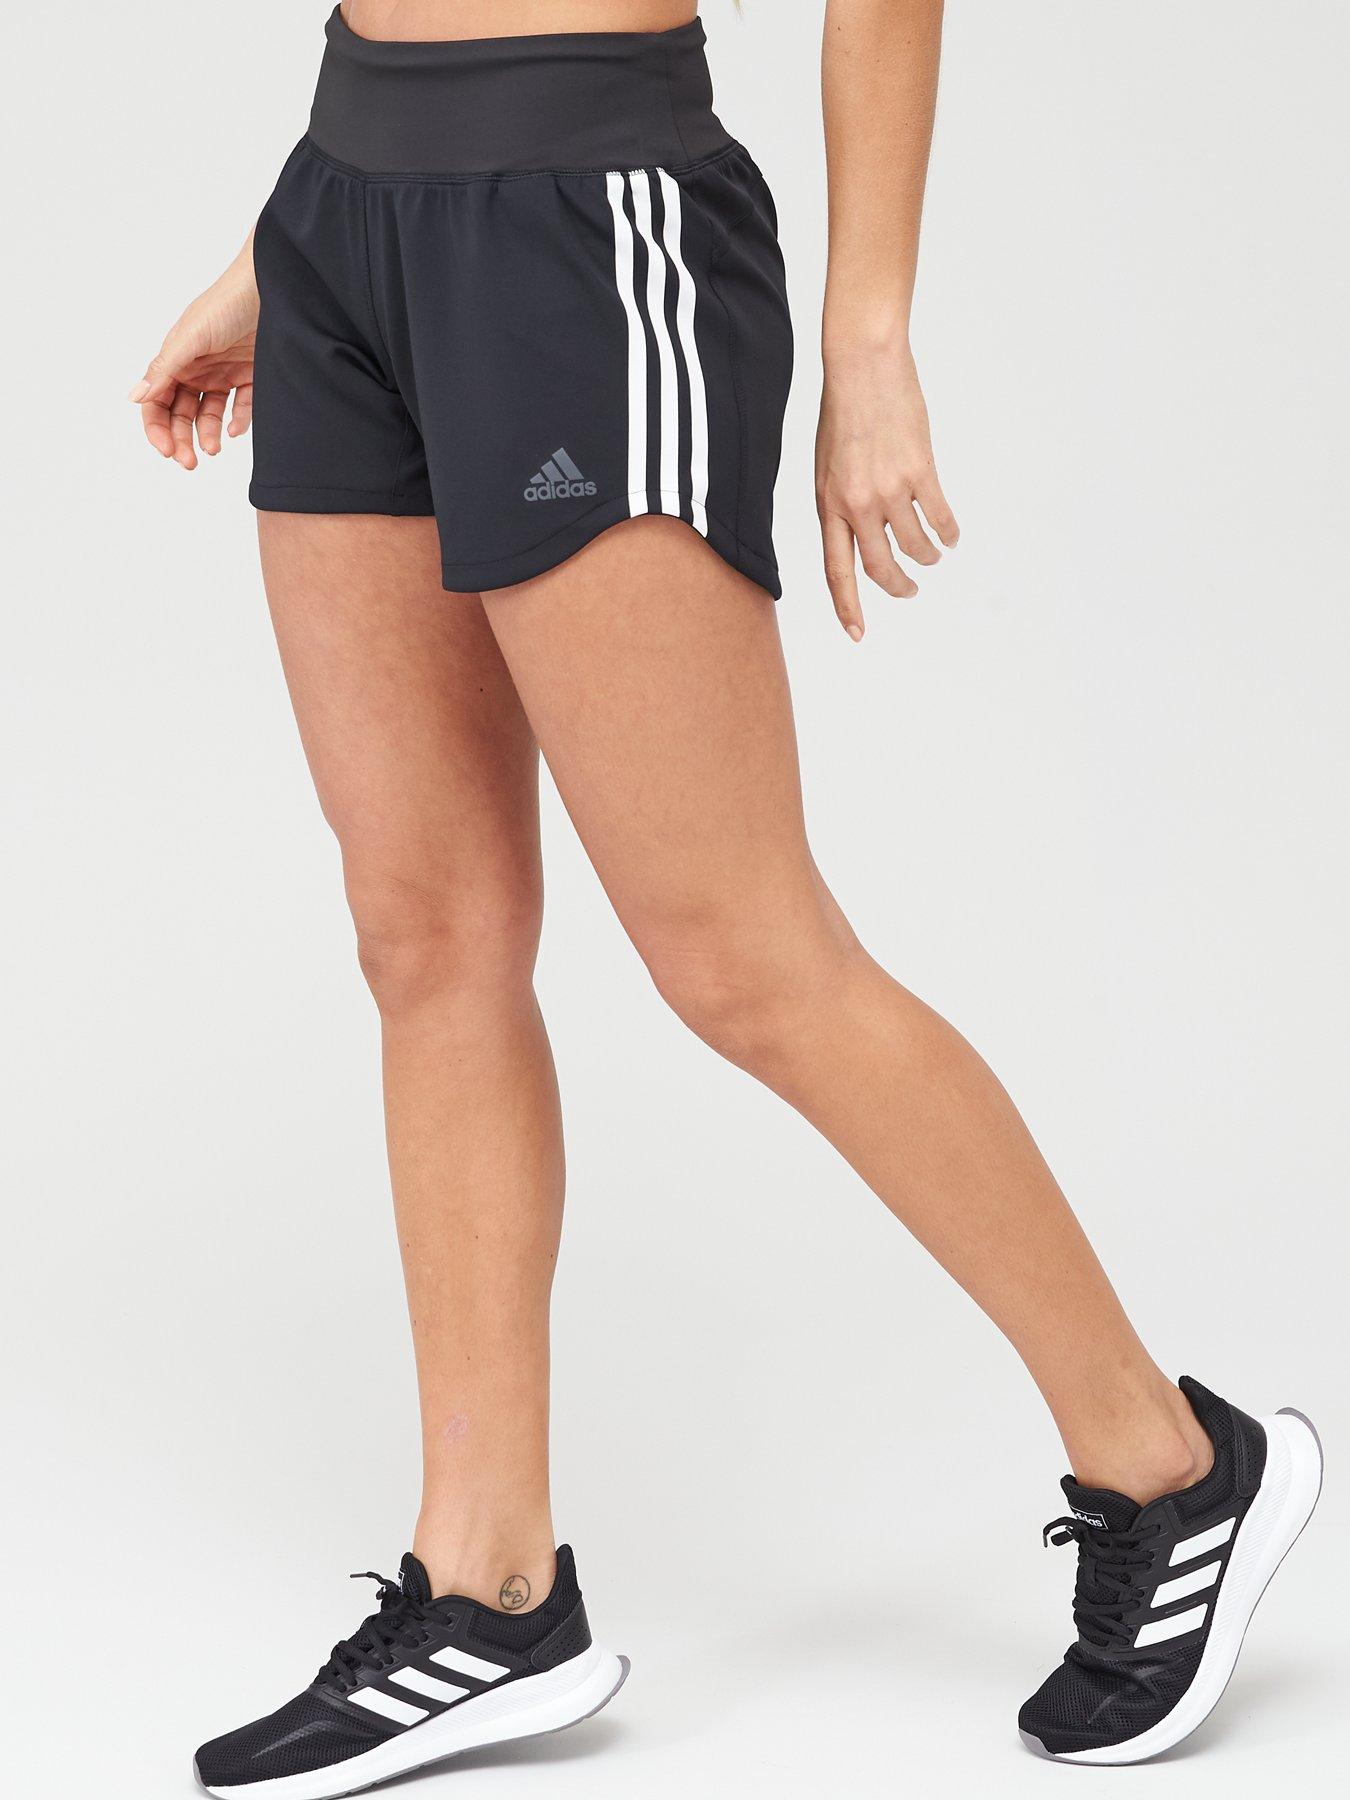 adidas training shorts womens